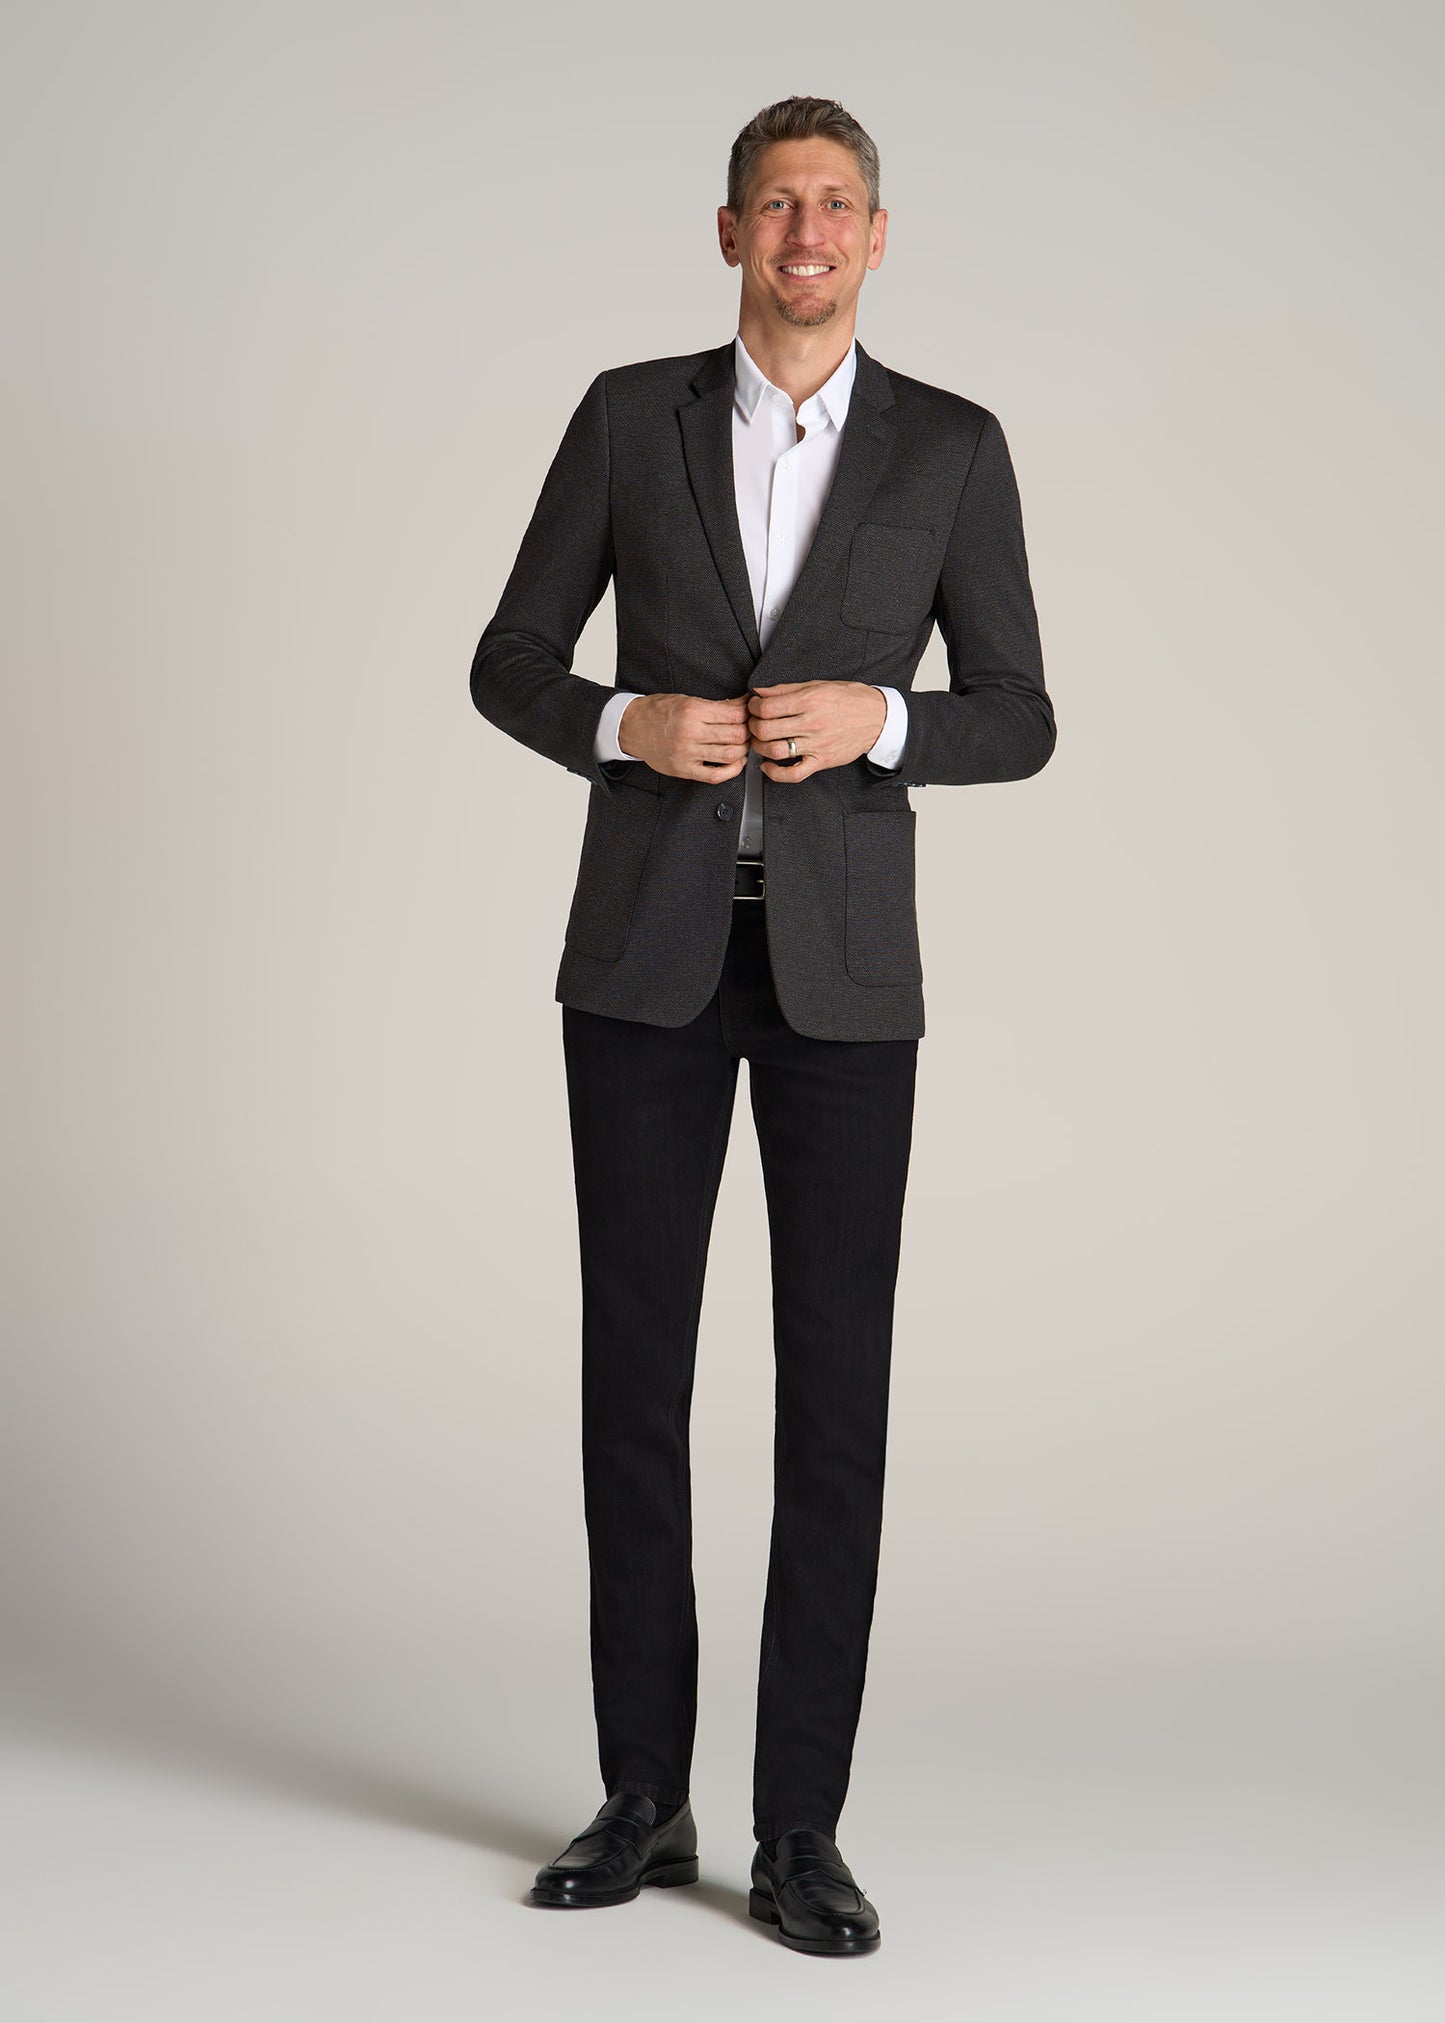 Dark Gray Cardigan Silver Tie White Shirt Black Pants Black Leather Shoes -  Men's Fashion For Less